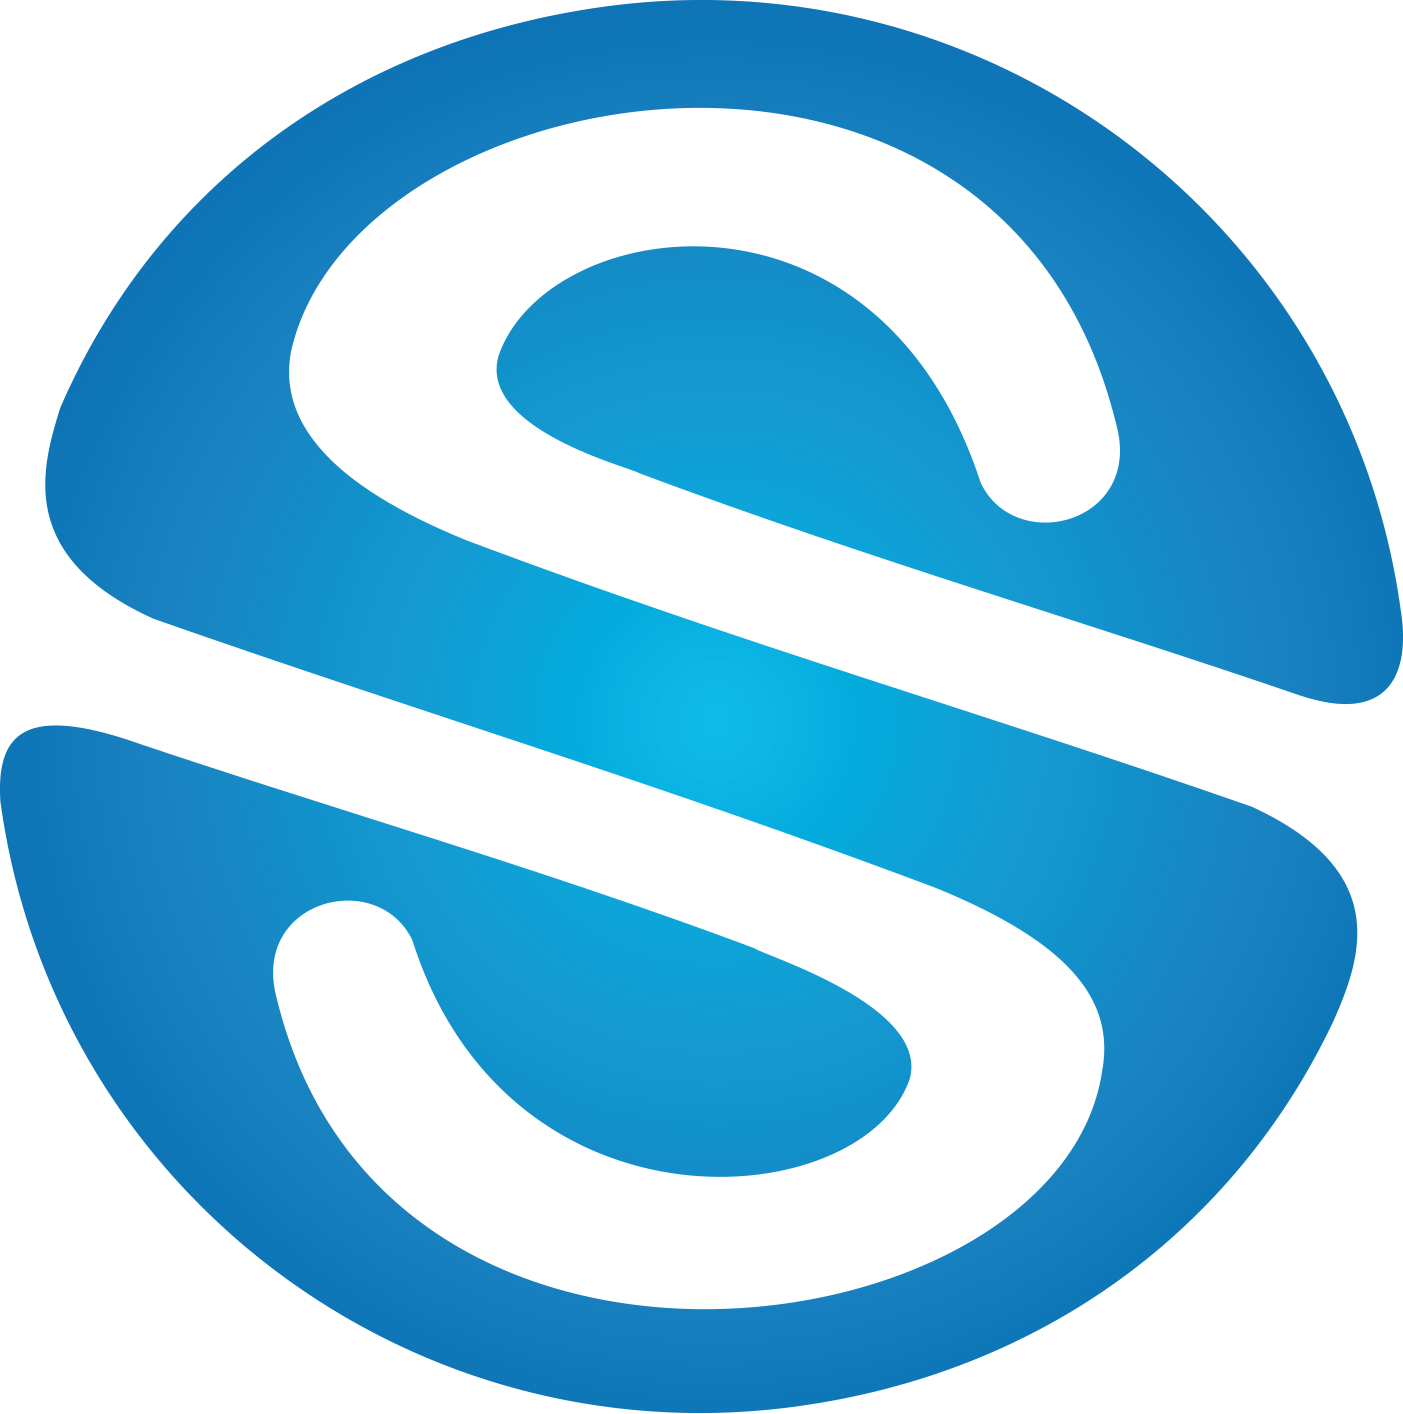 Senaptec Releases Quad Strobes - a New Breakthrough for Vision ...